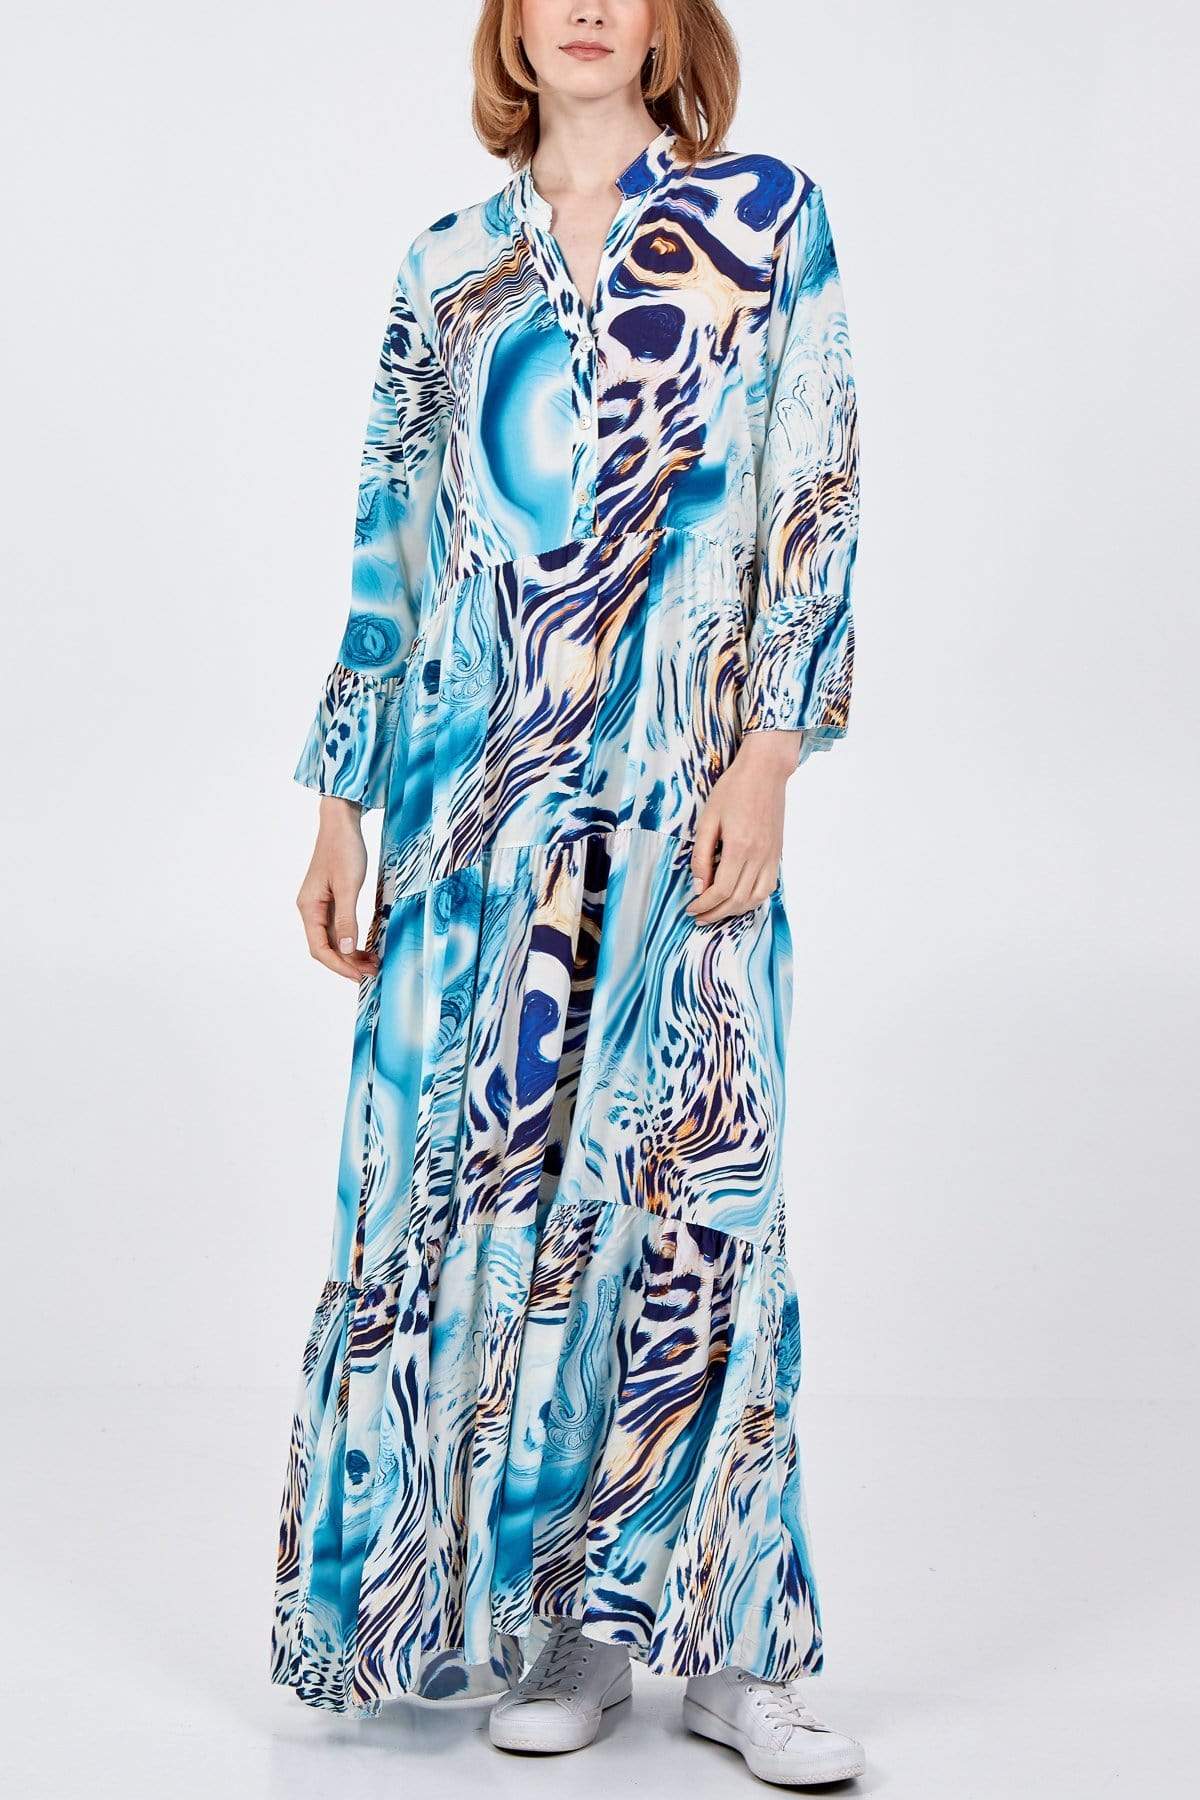 Diane Digital Abstract Leopard Maxi Dress - LB Clothing